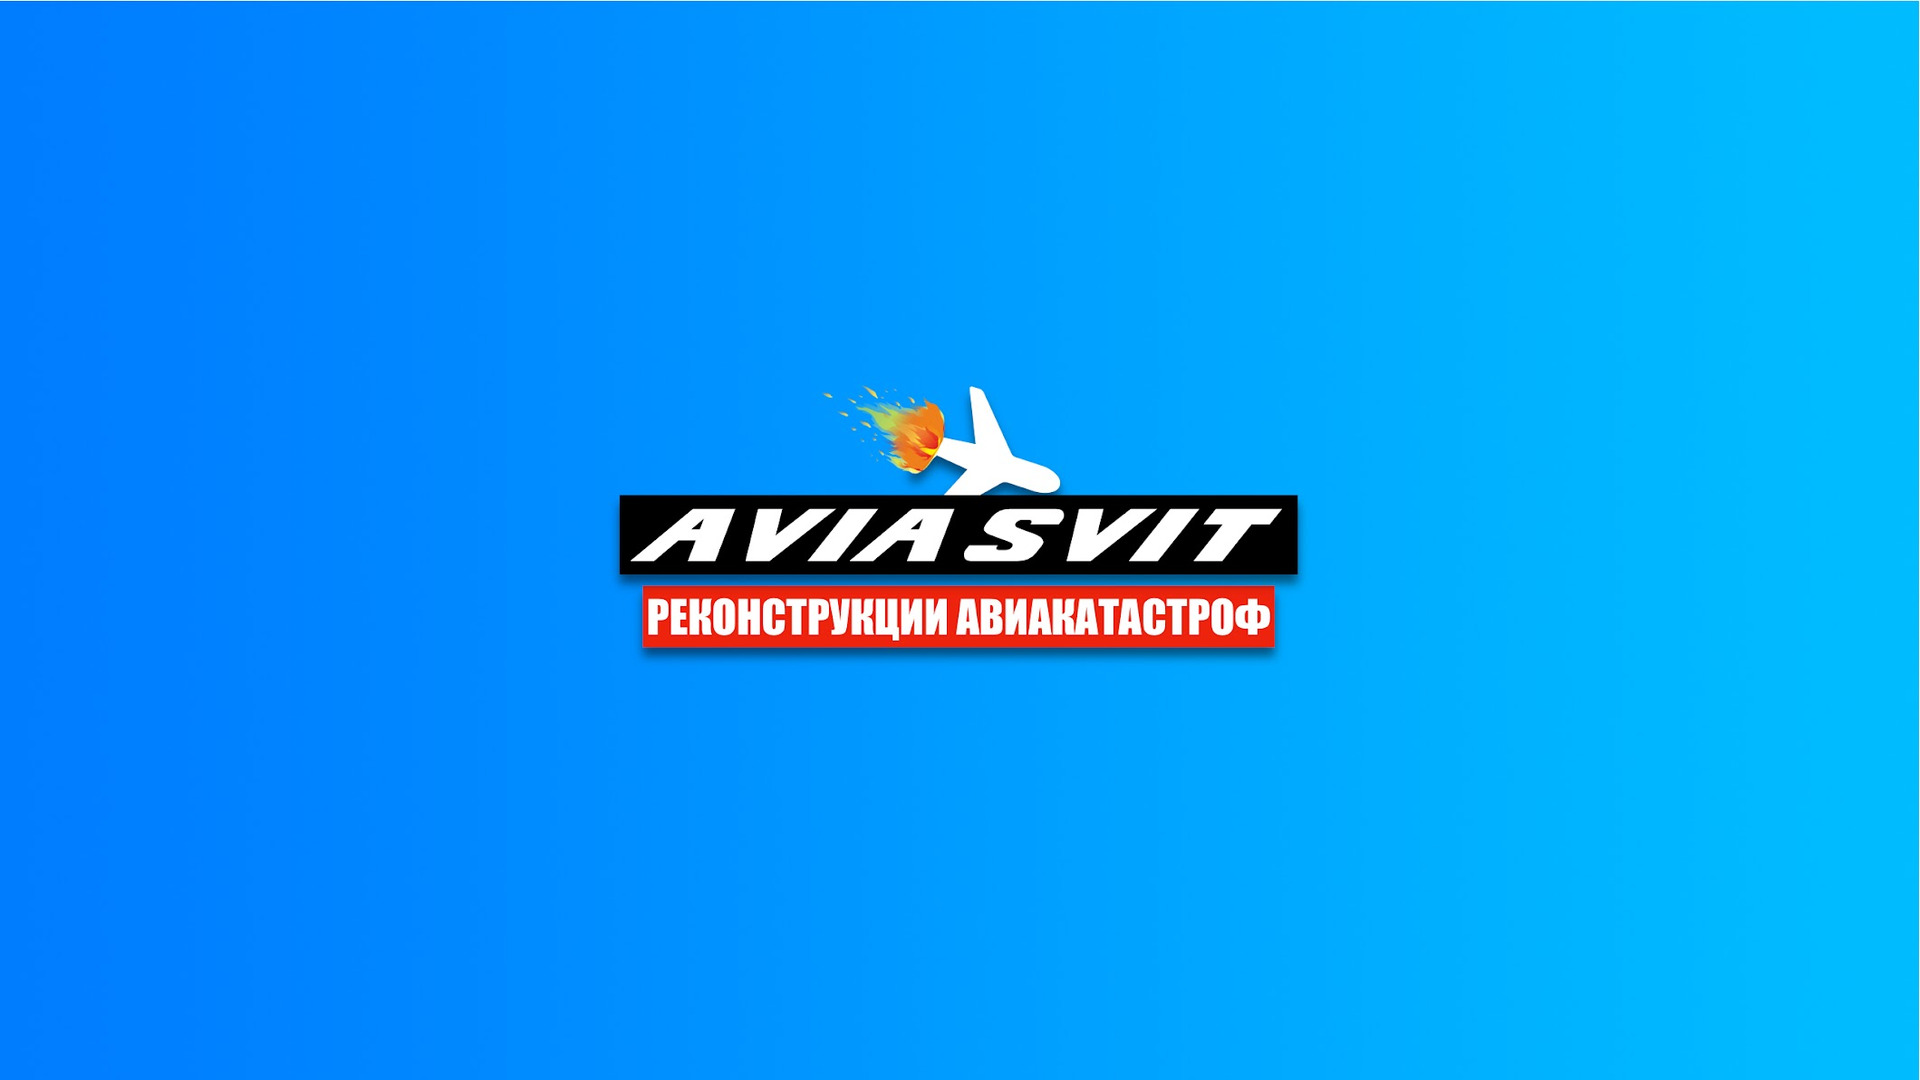 Сериал AVIA SVIT Реконструкции Авиакатастроф